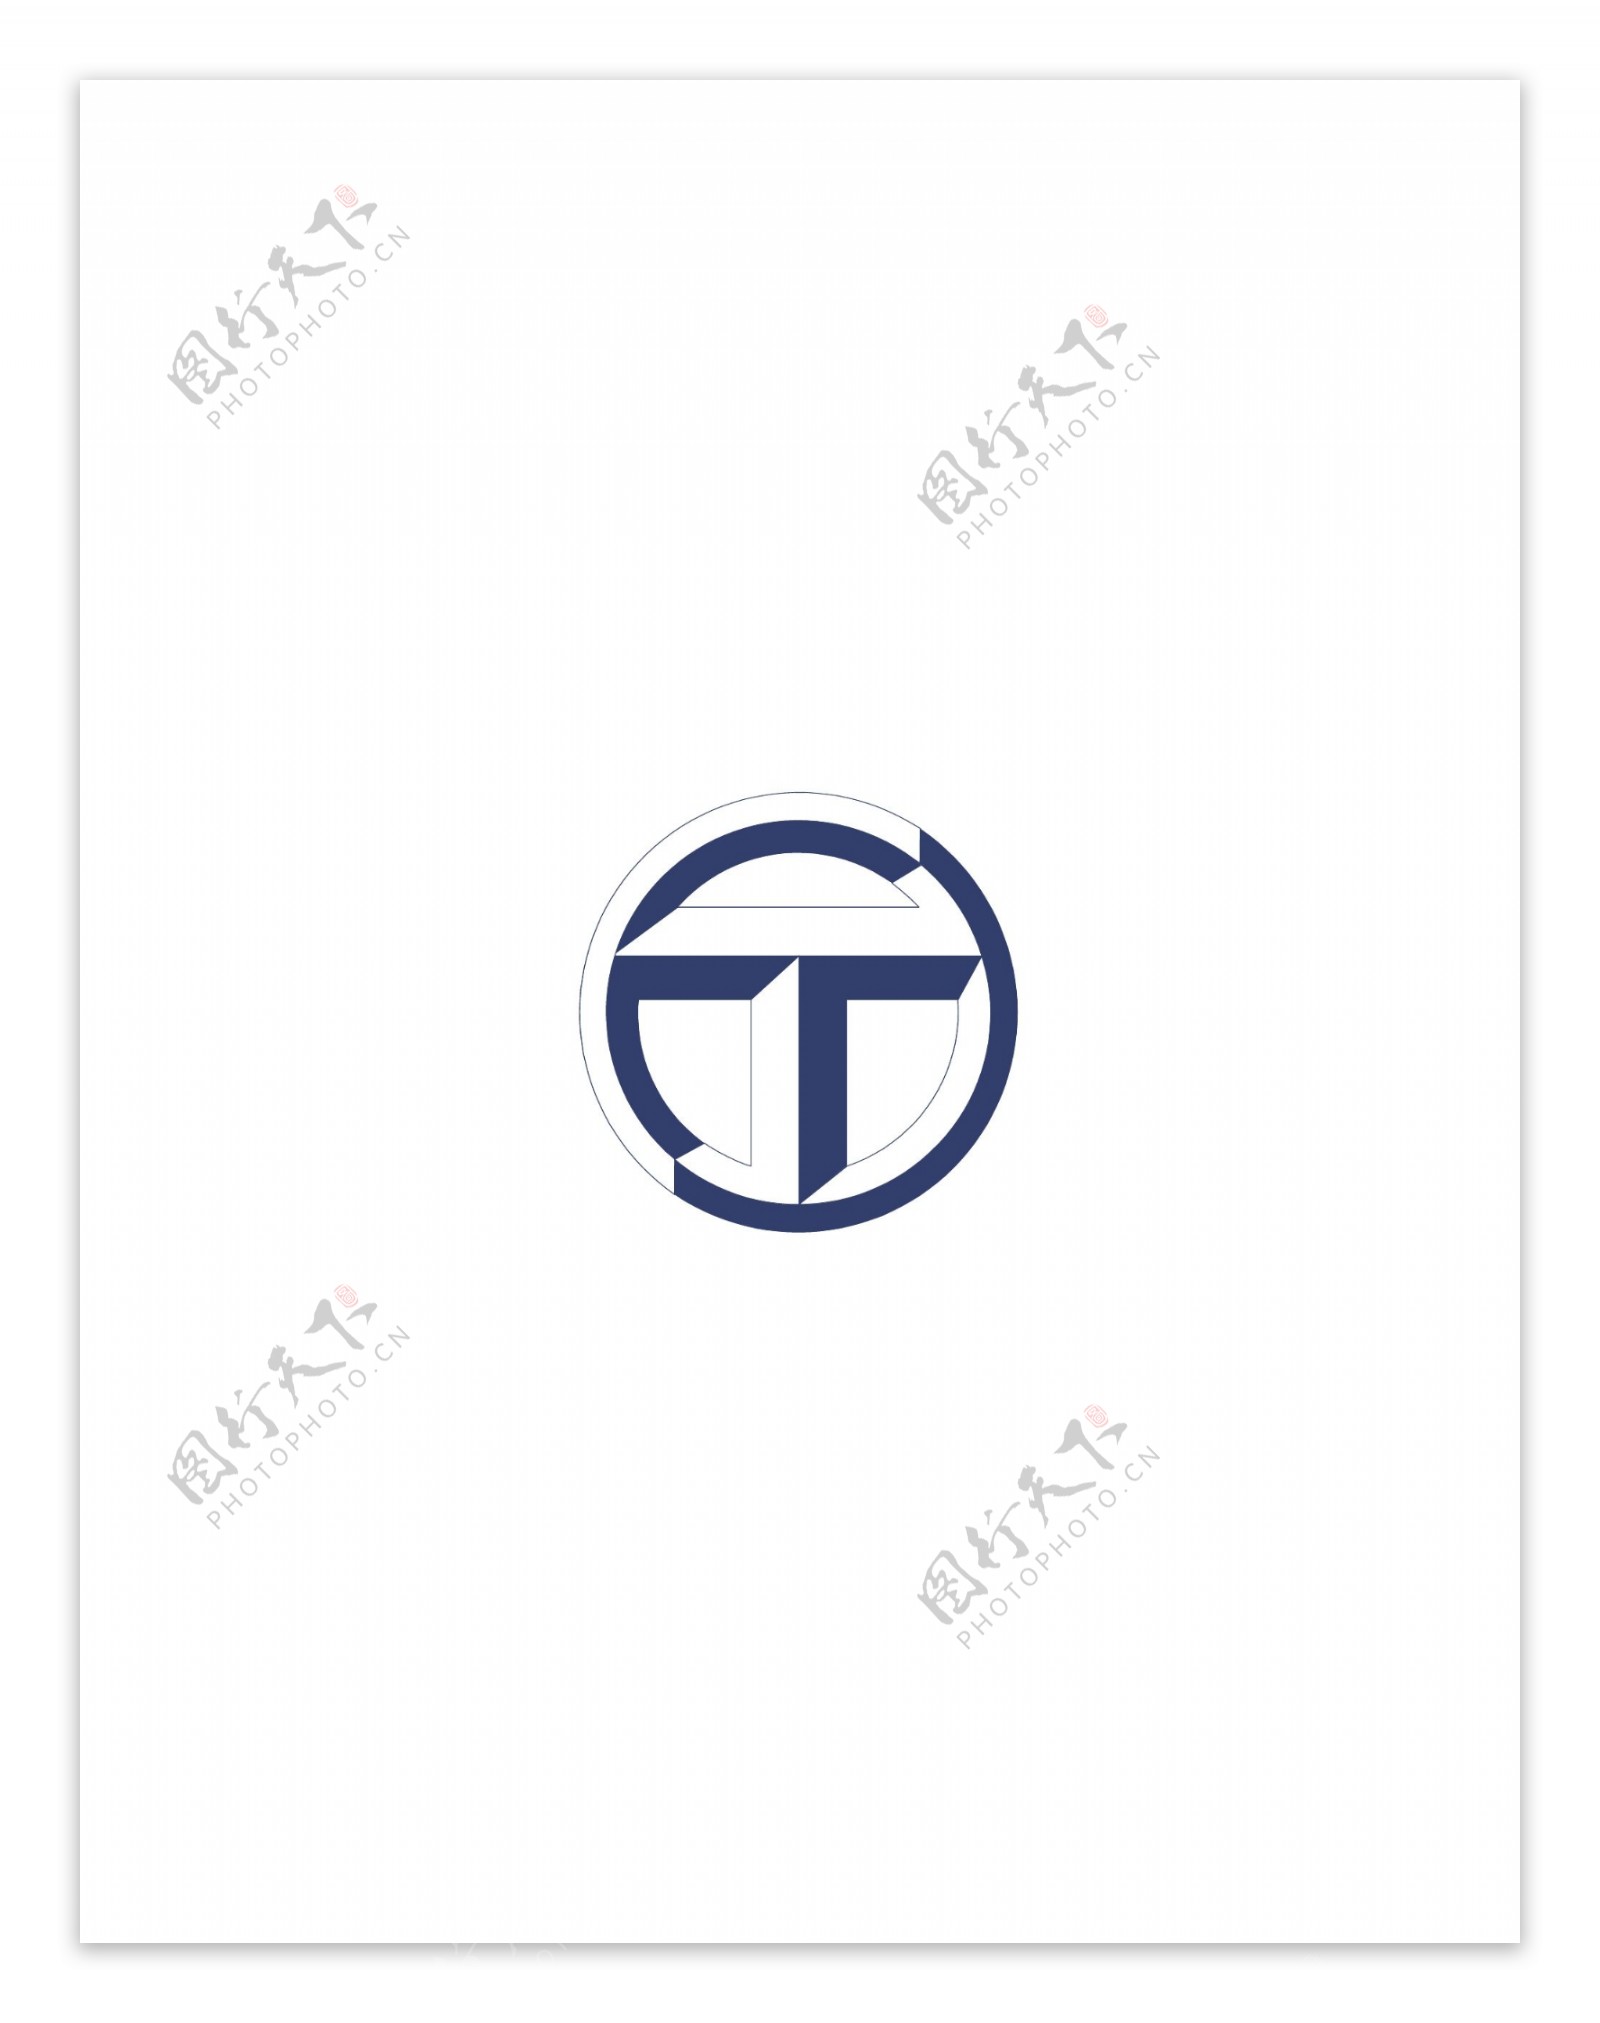 Talbotlogo设计欣赏国外知名公司标志范例Talbot下载标志设计欣赏